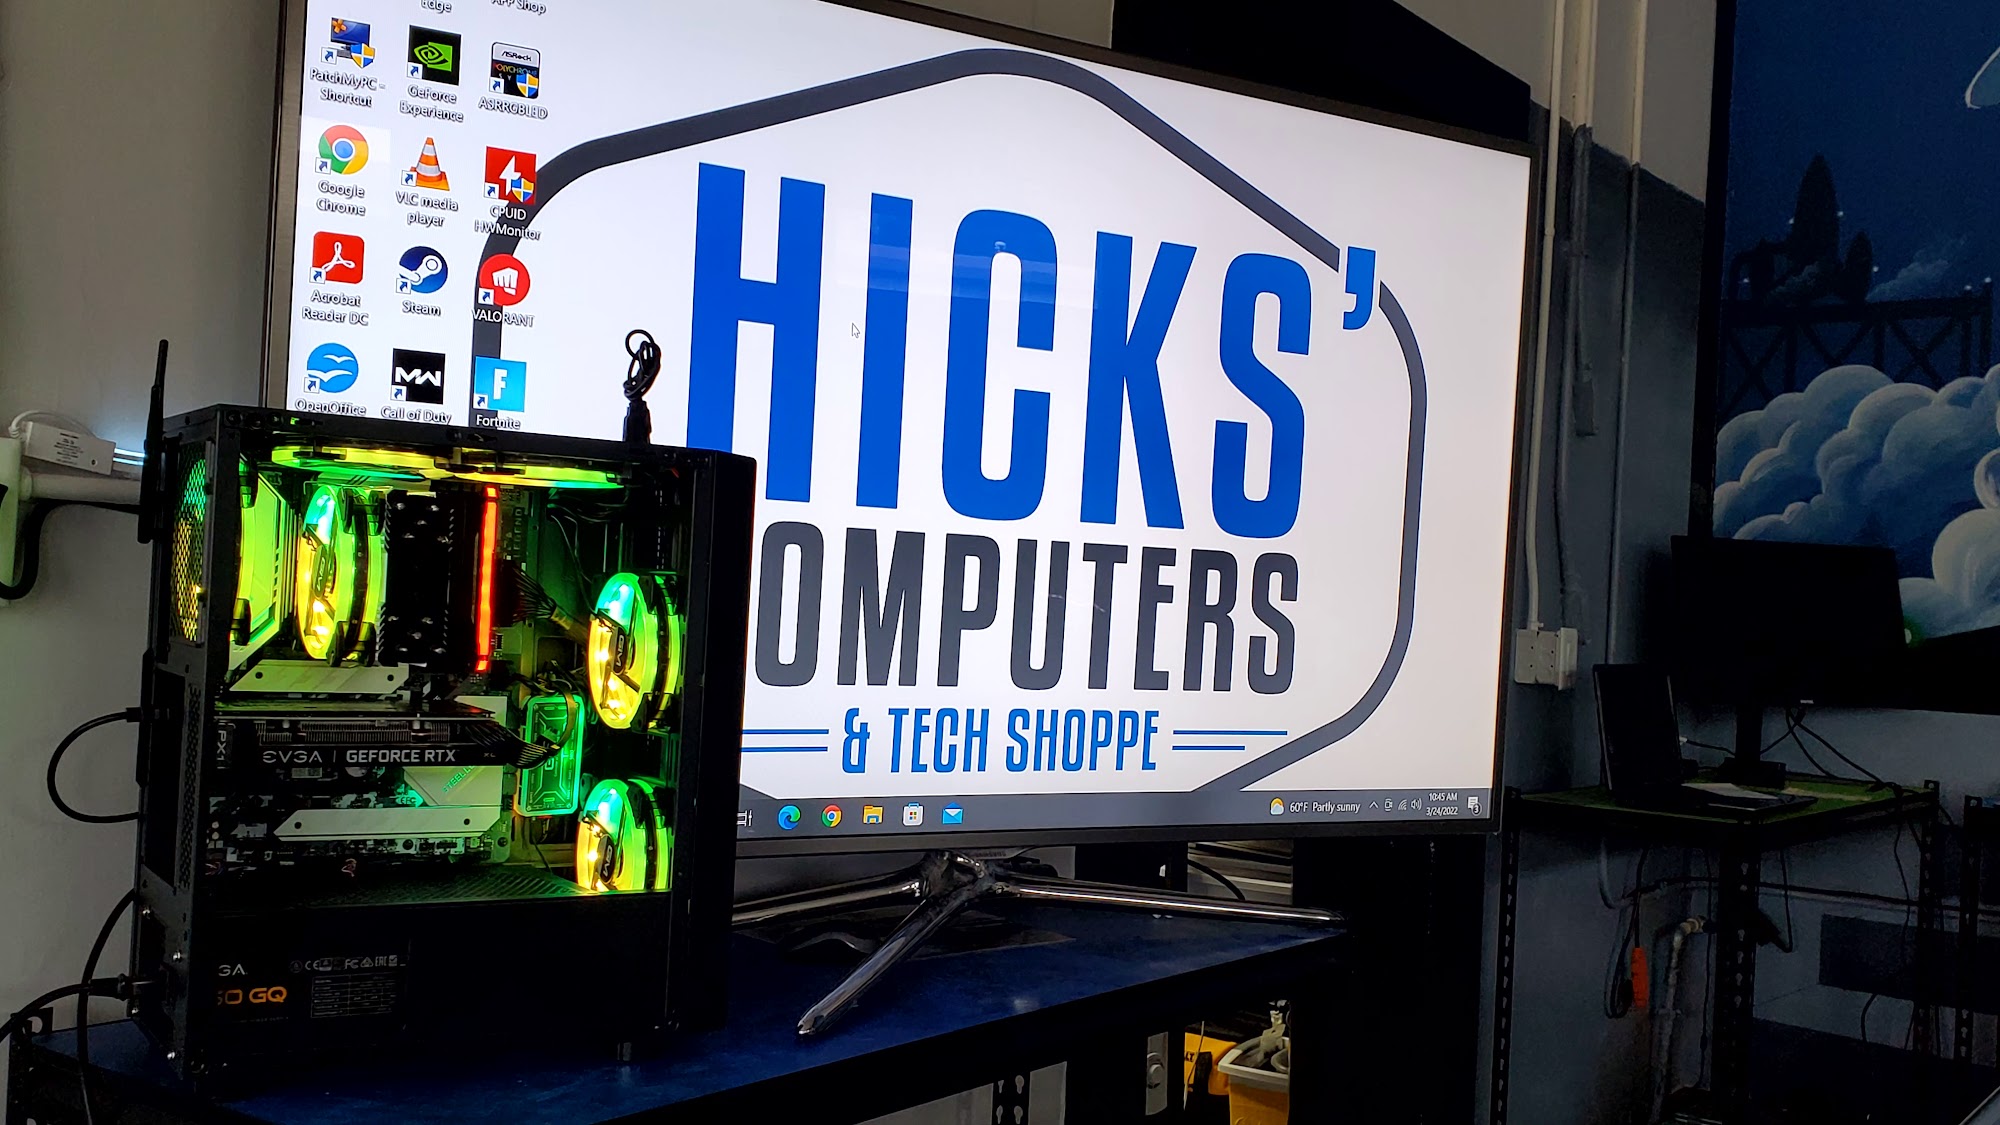 Hicks’ Computers & Tech Shoppe